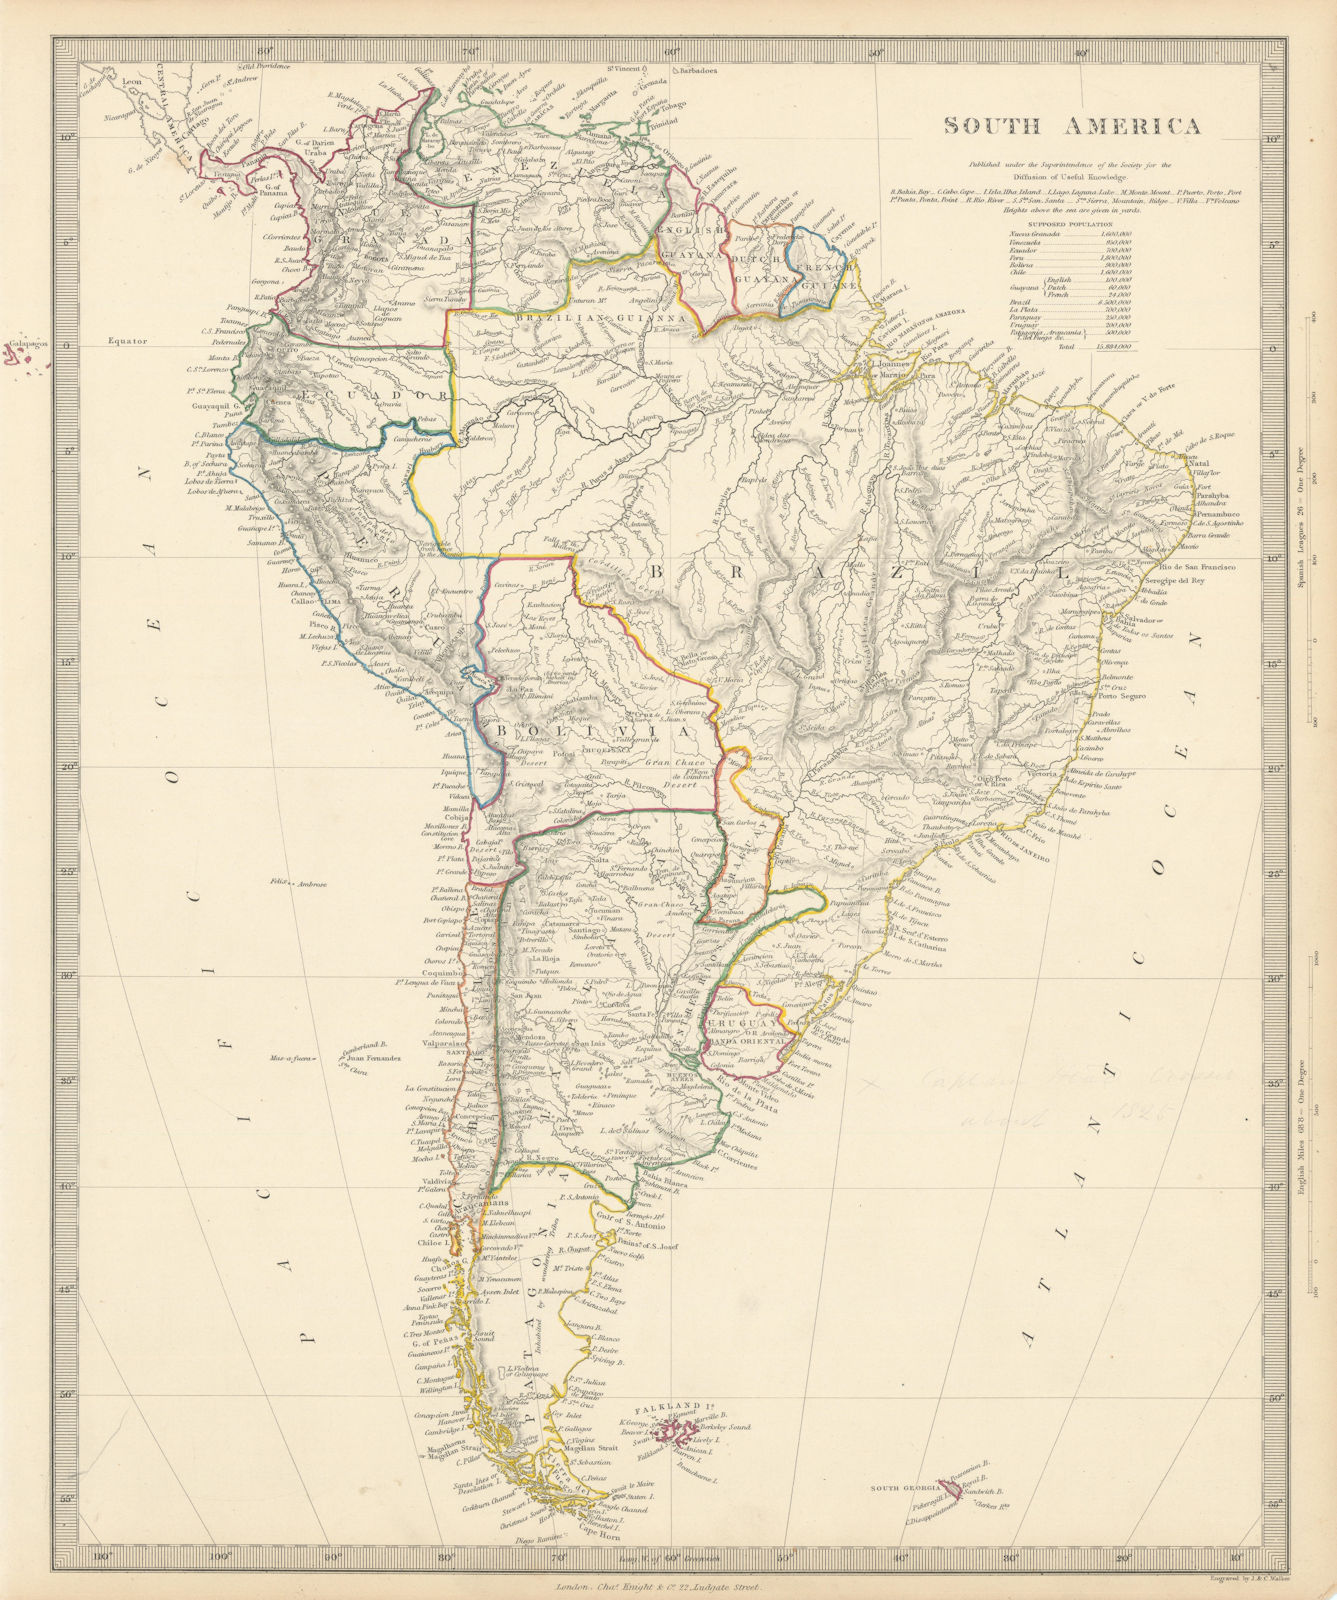 Associate Product SOUTH AMERICA. Brazil Chile Peru Bolivia Patagonia La Plata. SDUK 1844 old map